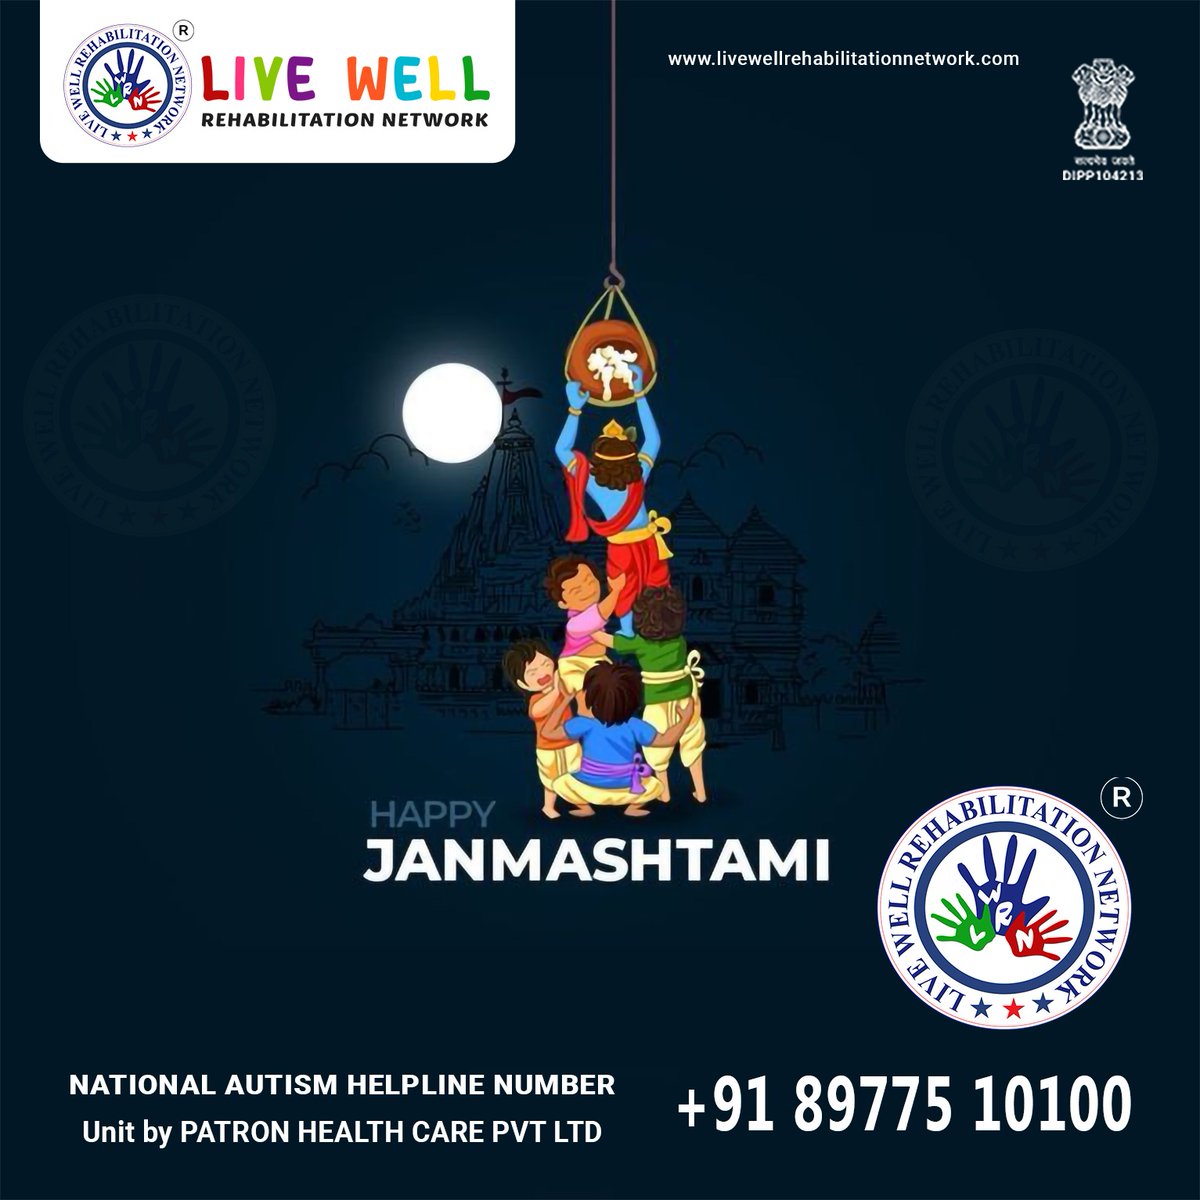 Happy Janmashtami.
LIVE WELL Rehabilitation Network 
.
#krishnajanmashtami #lwrnetworks  #livewell #RehabilitationCenter #autismawareness